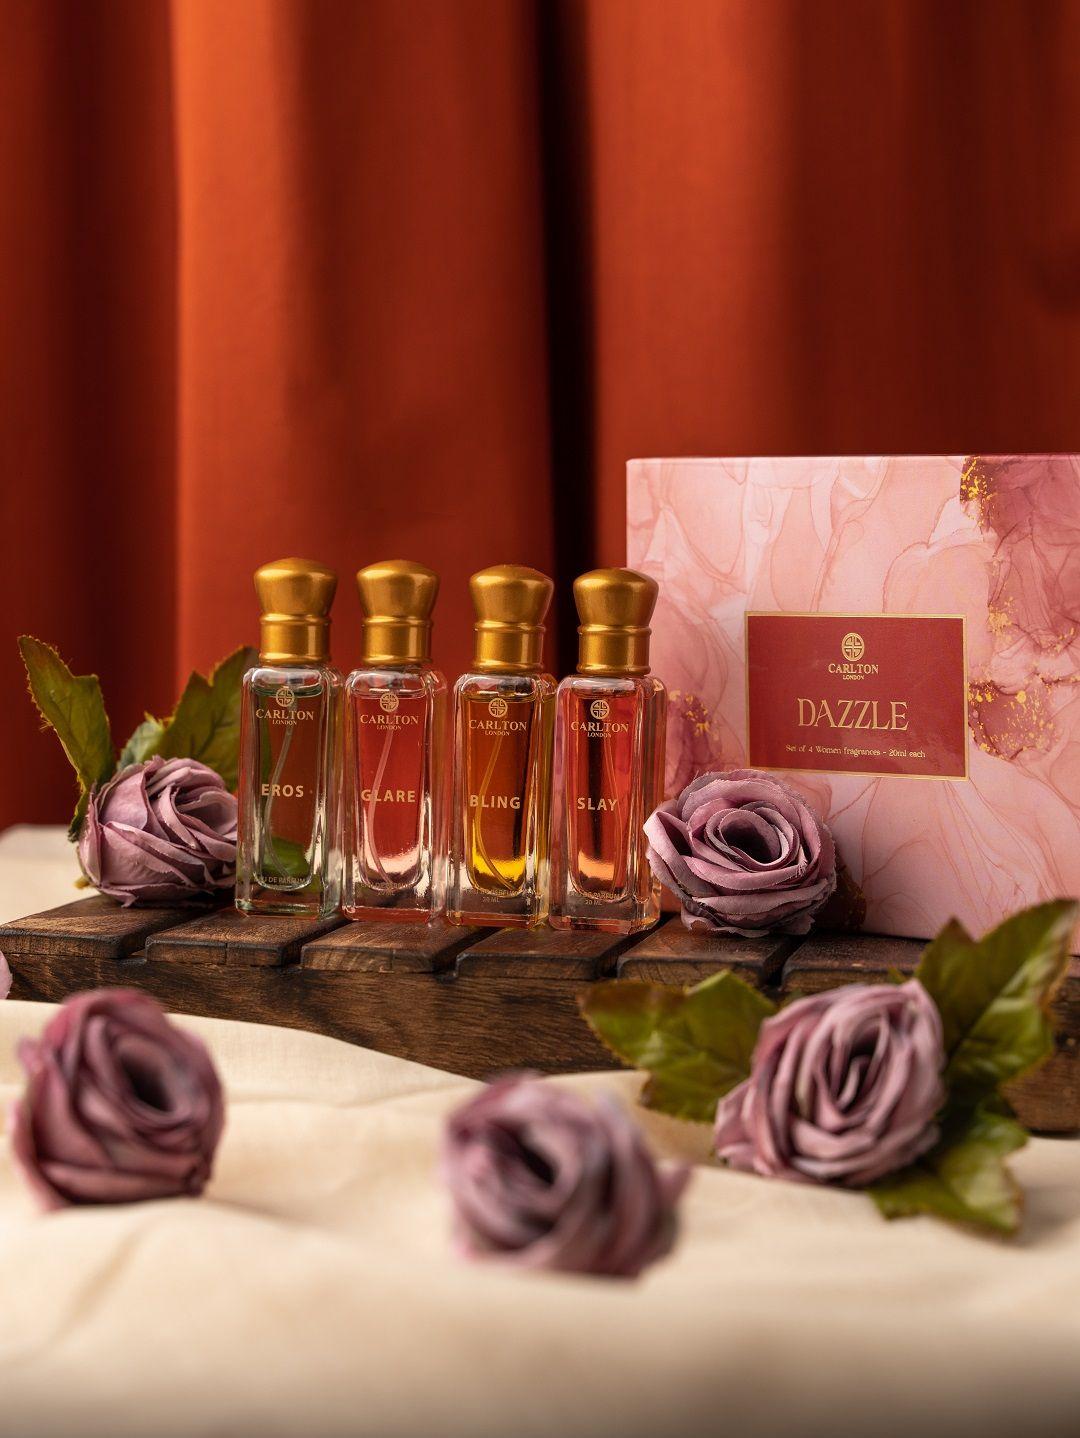 carlton-london-women-dazzle-edp-fragrance-gift-set